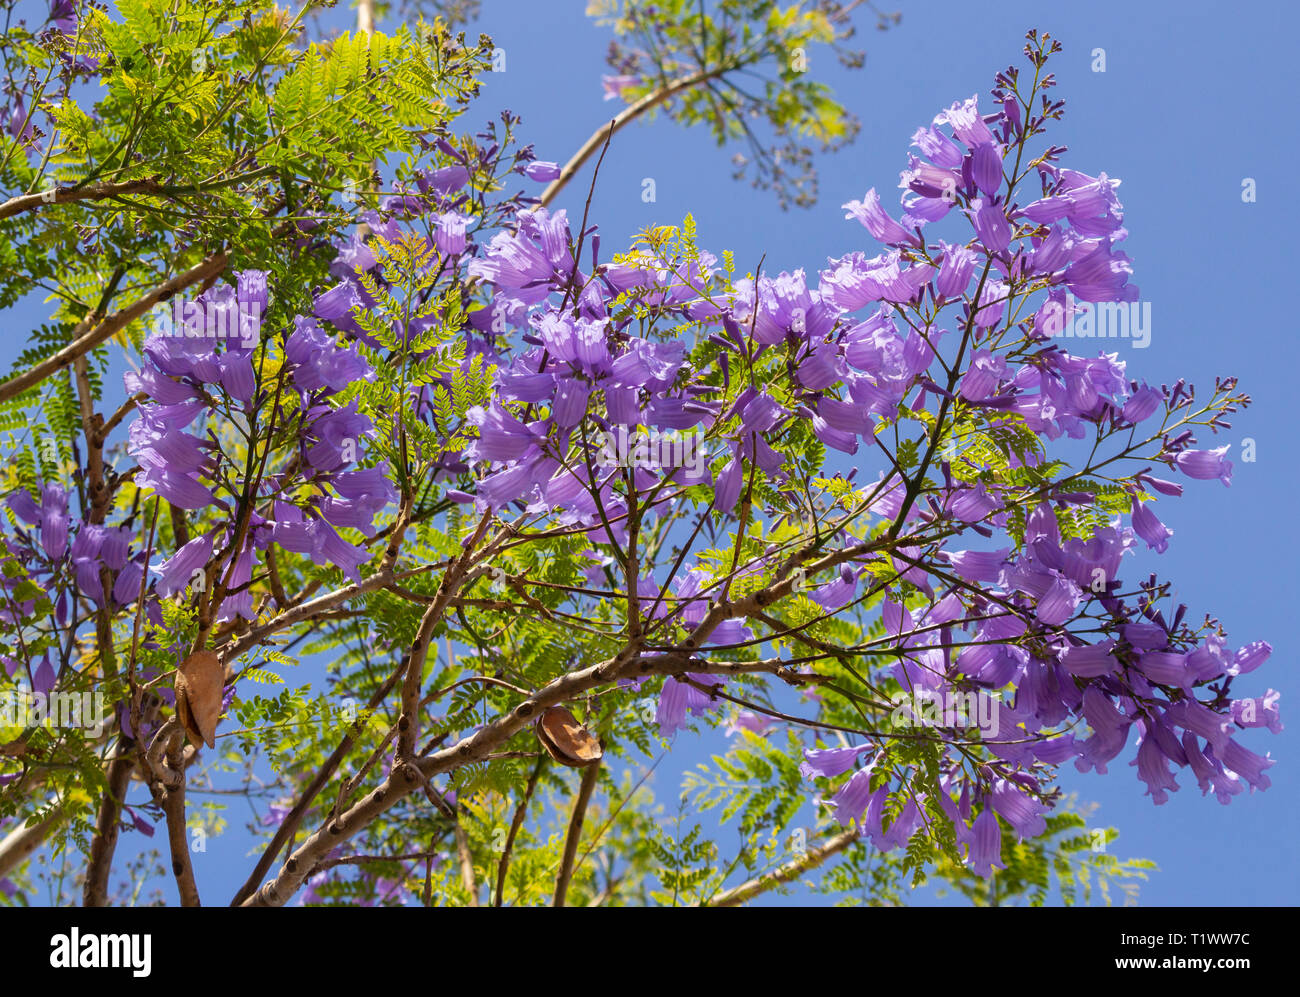 Jacaranda Tree Stockfotos und  bilder Kaufen   Alamy